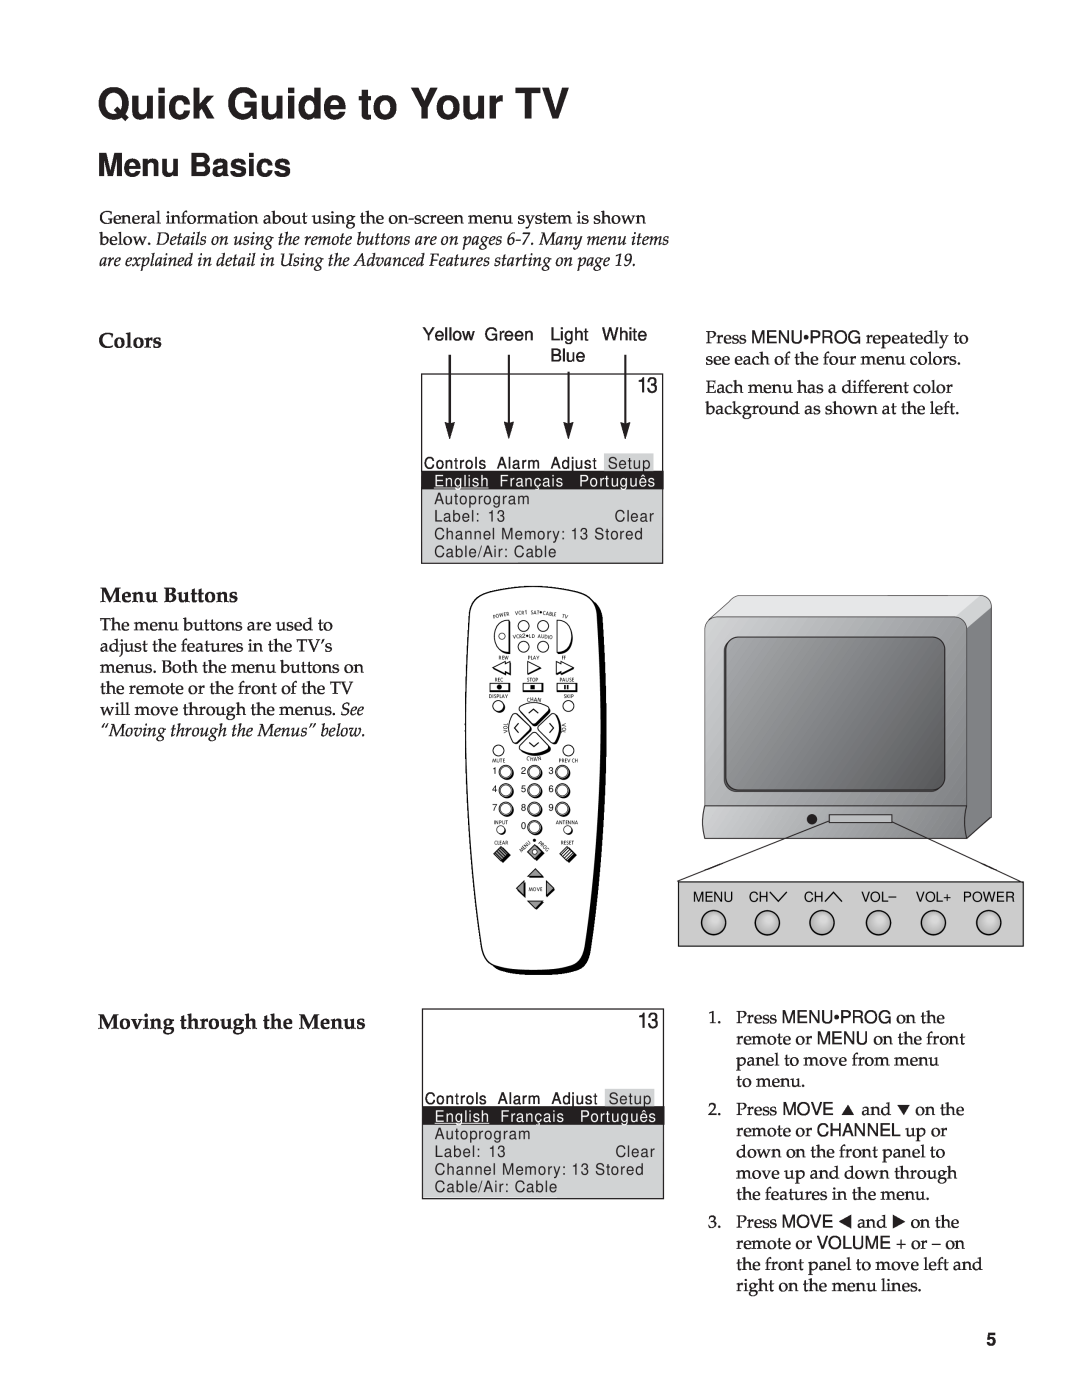 RCA RBA27500, 27000 manual Menu Basics, Colors, Moving through the Menus, Quick Guide to Your TV, Menu Buttons 